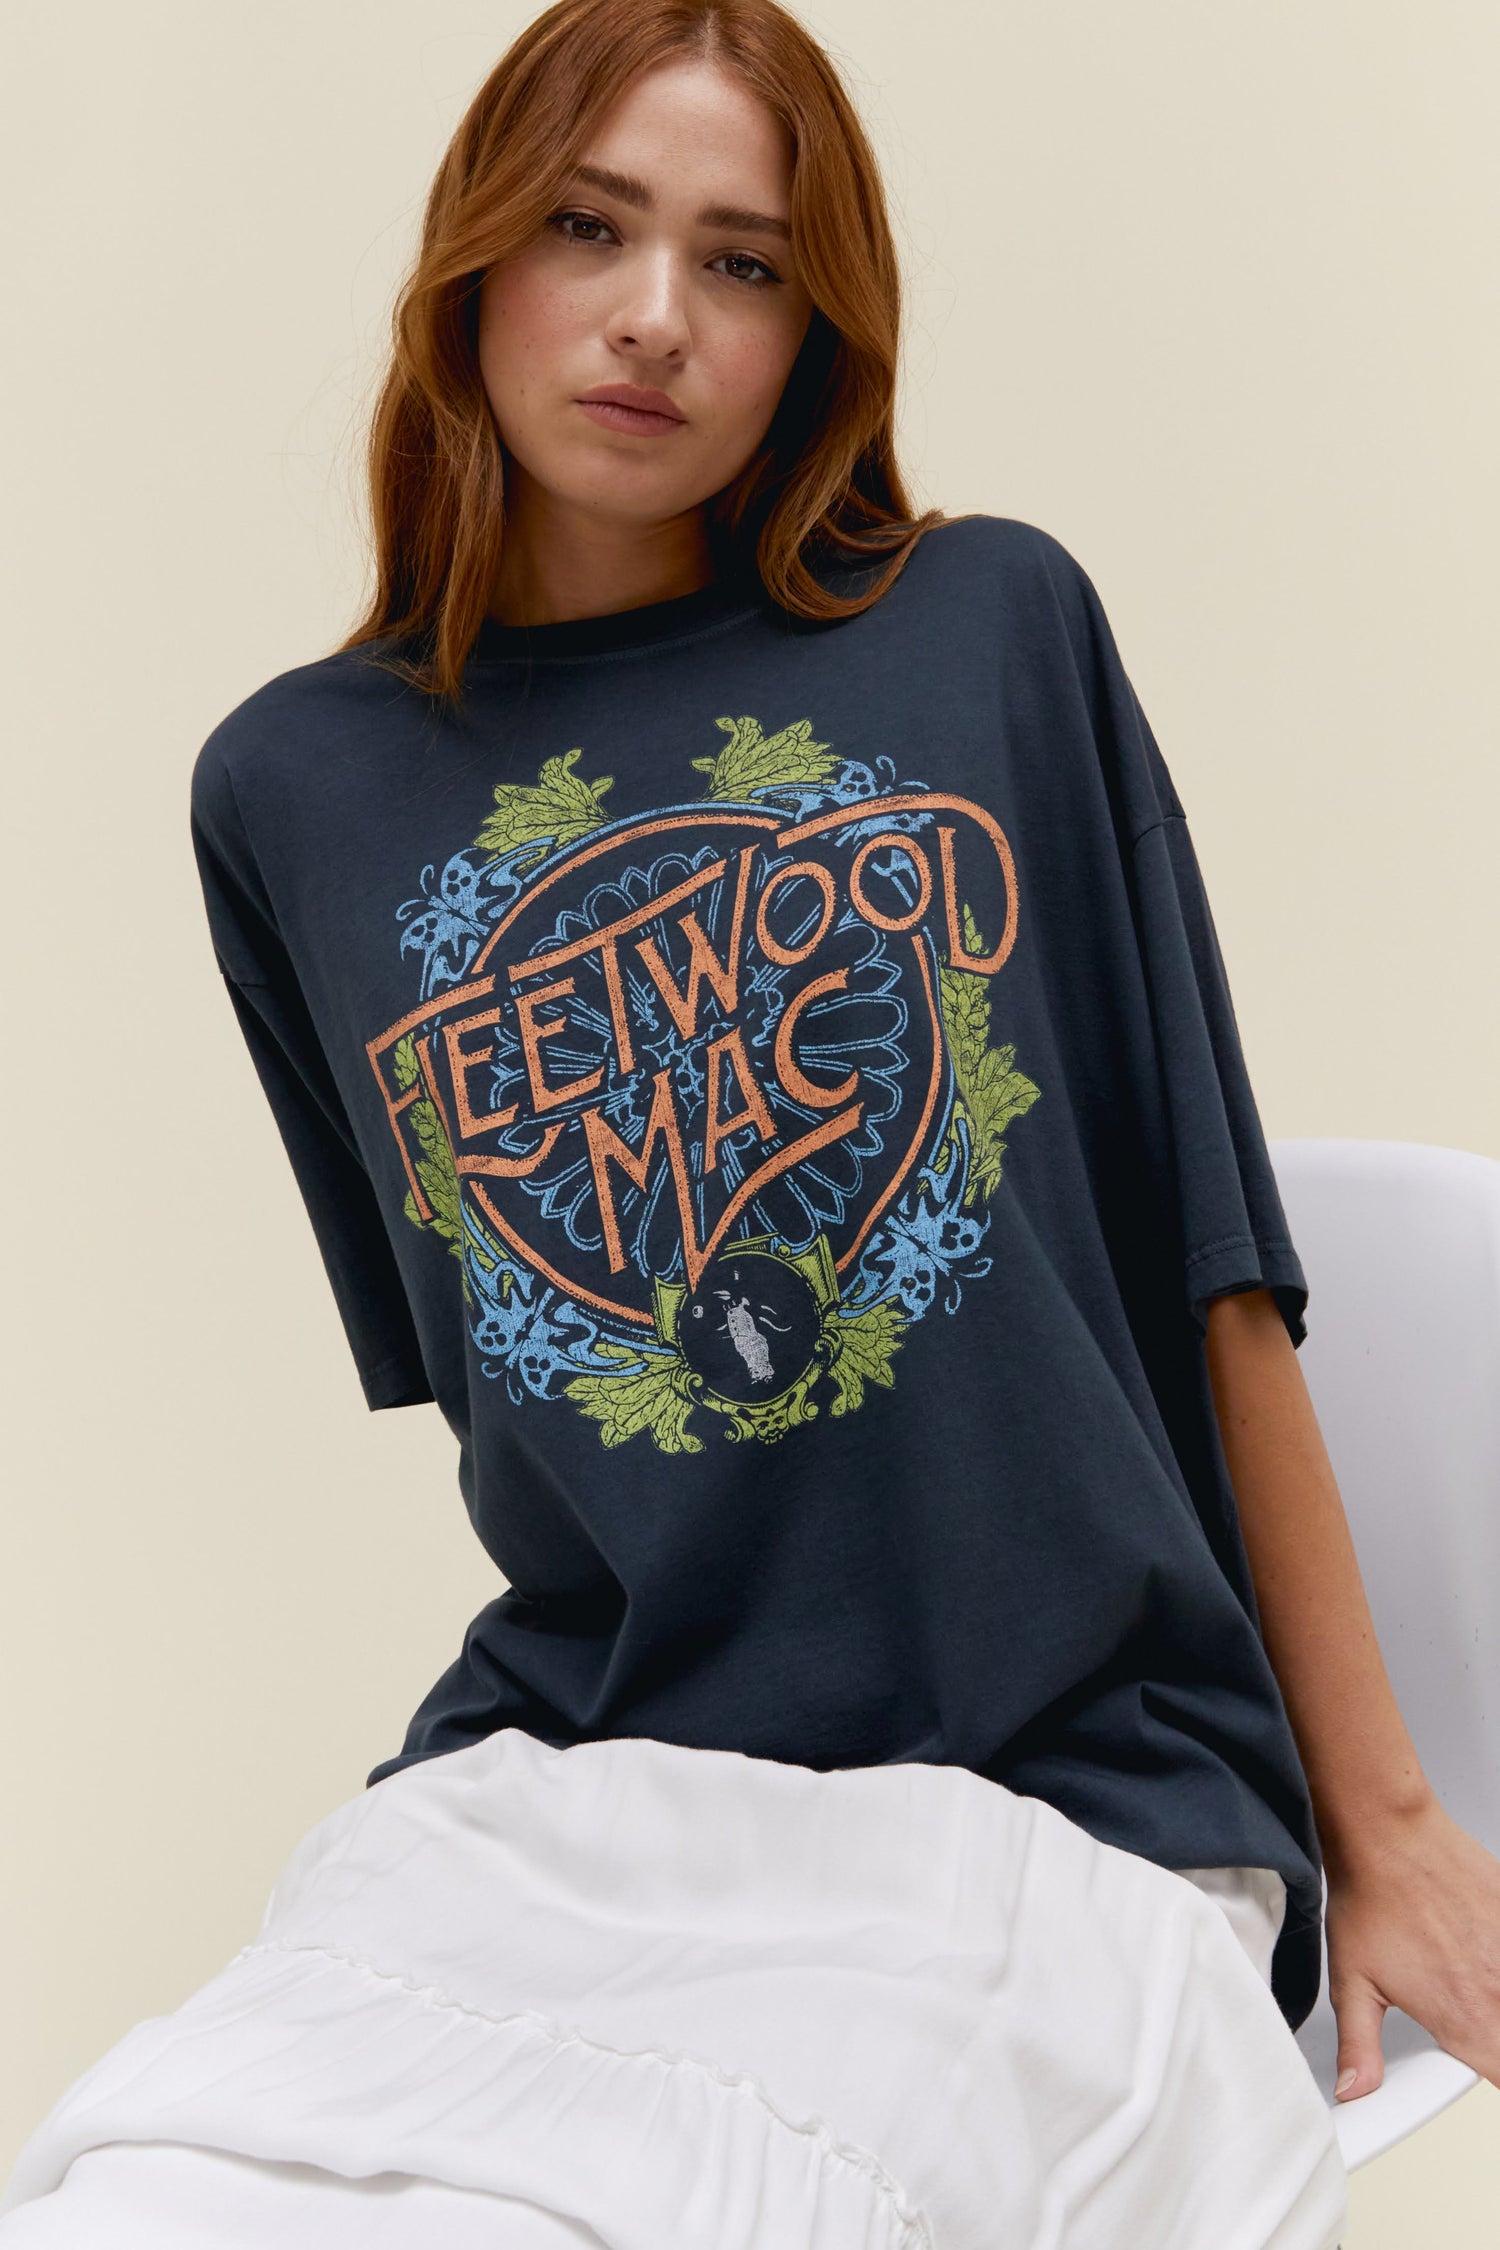 Model wearing an oversized Fleetwood Mac flower crest graphic tee in vintage black.